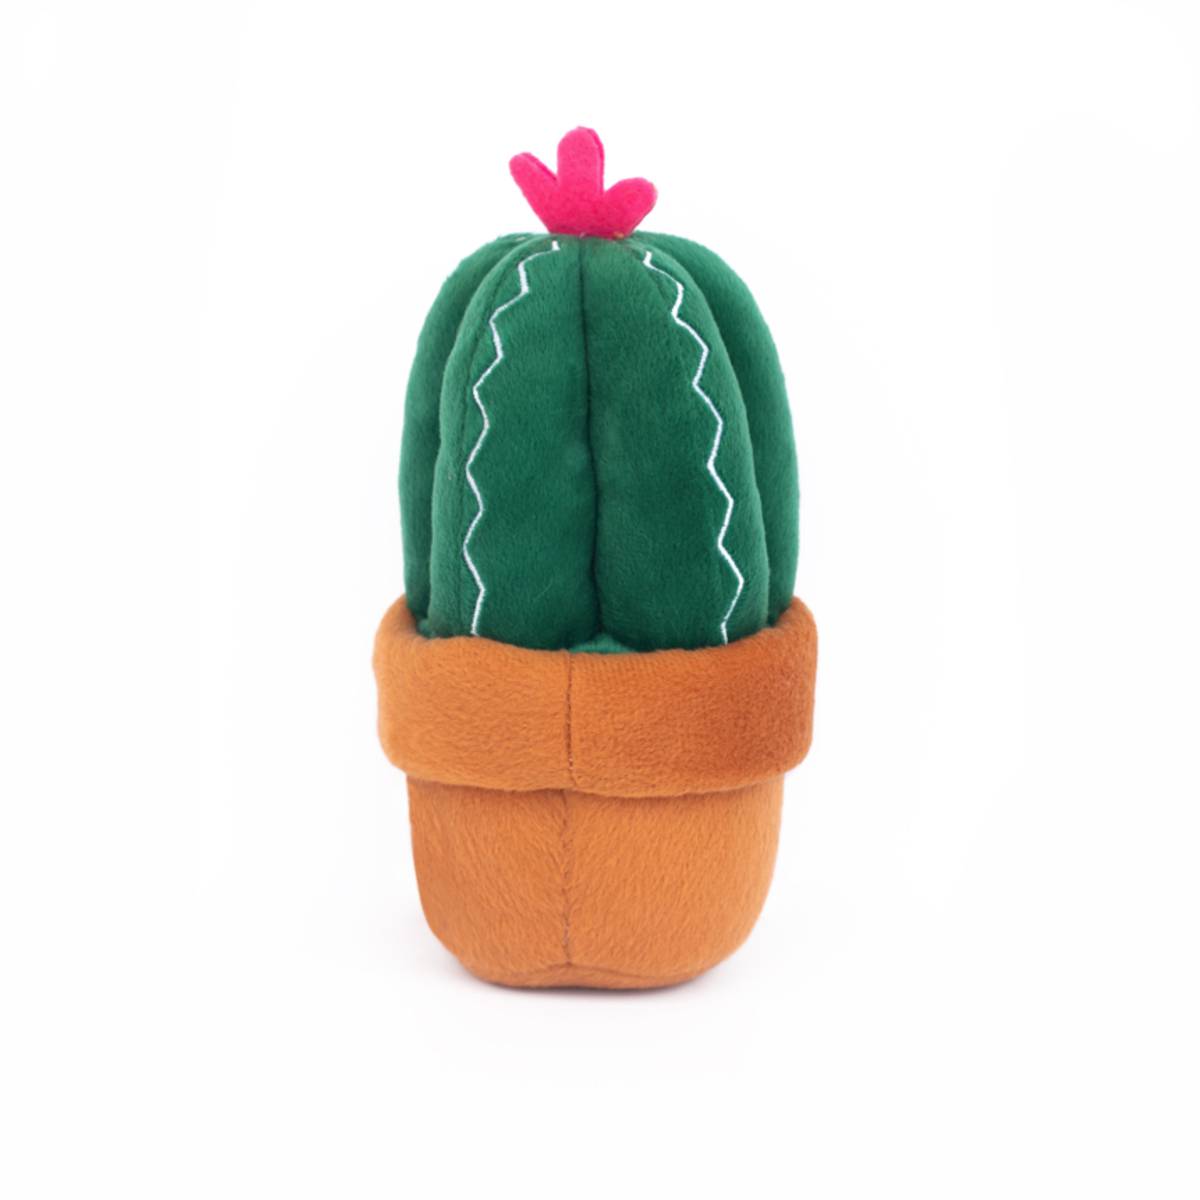 Carmen the Cactus Plush Toy | Pawlicious & Company